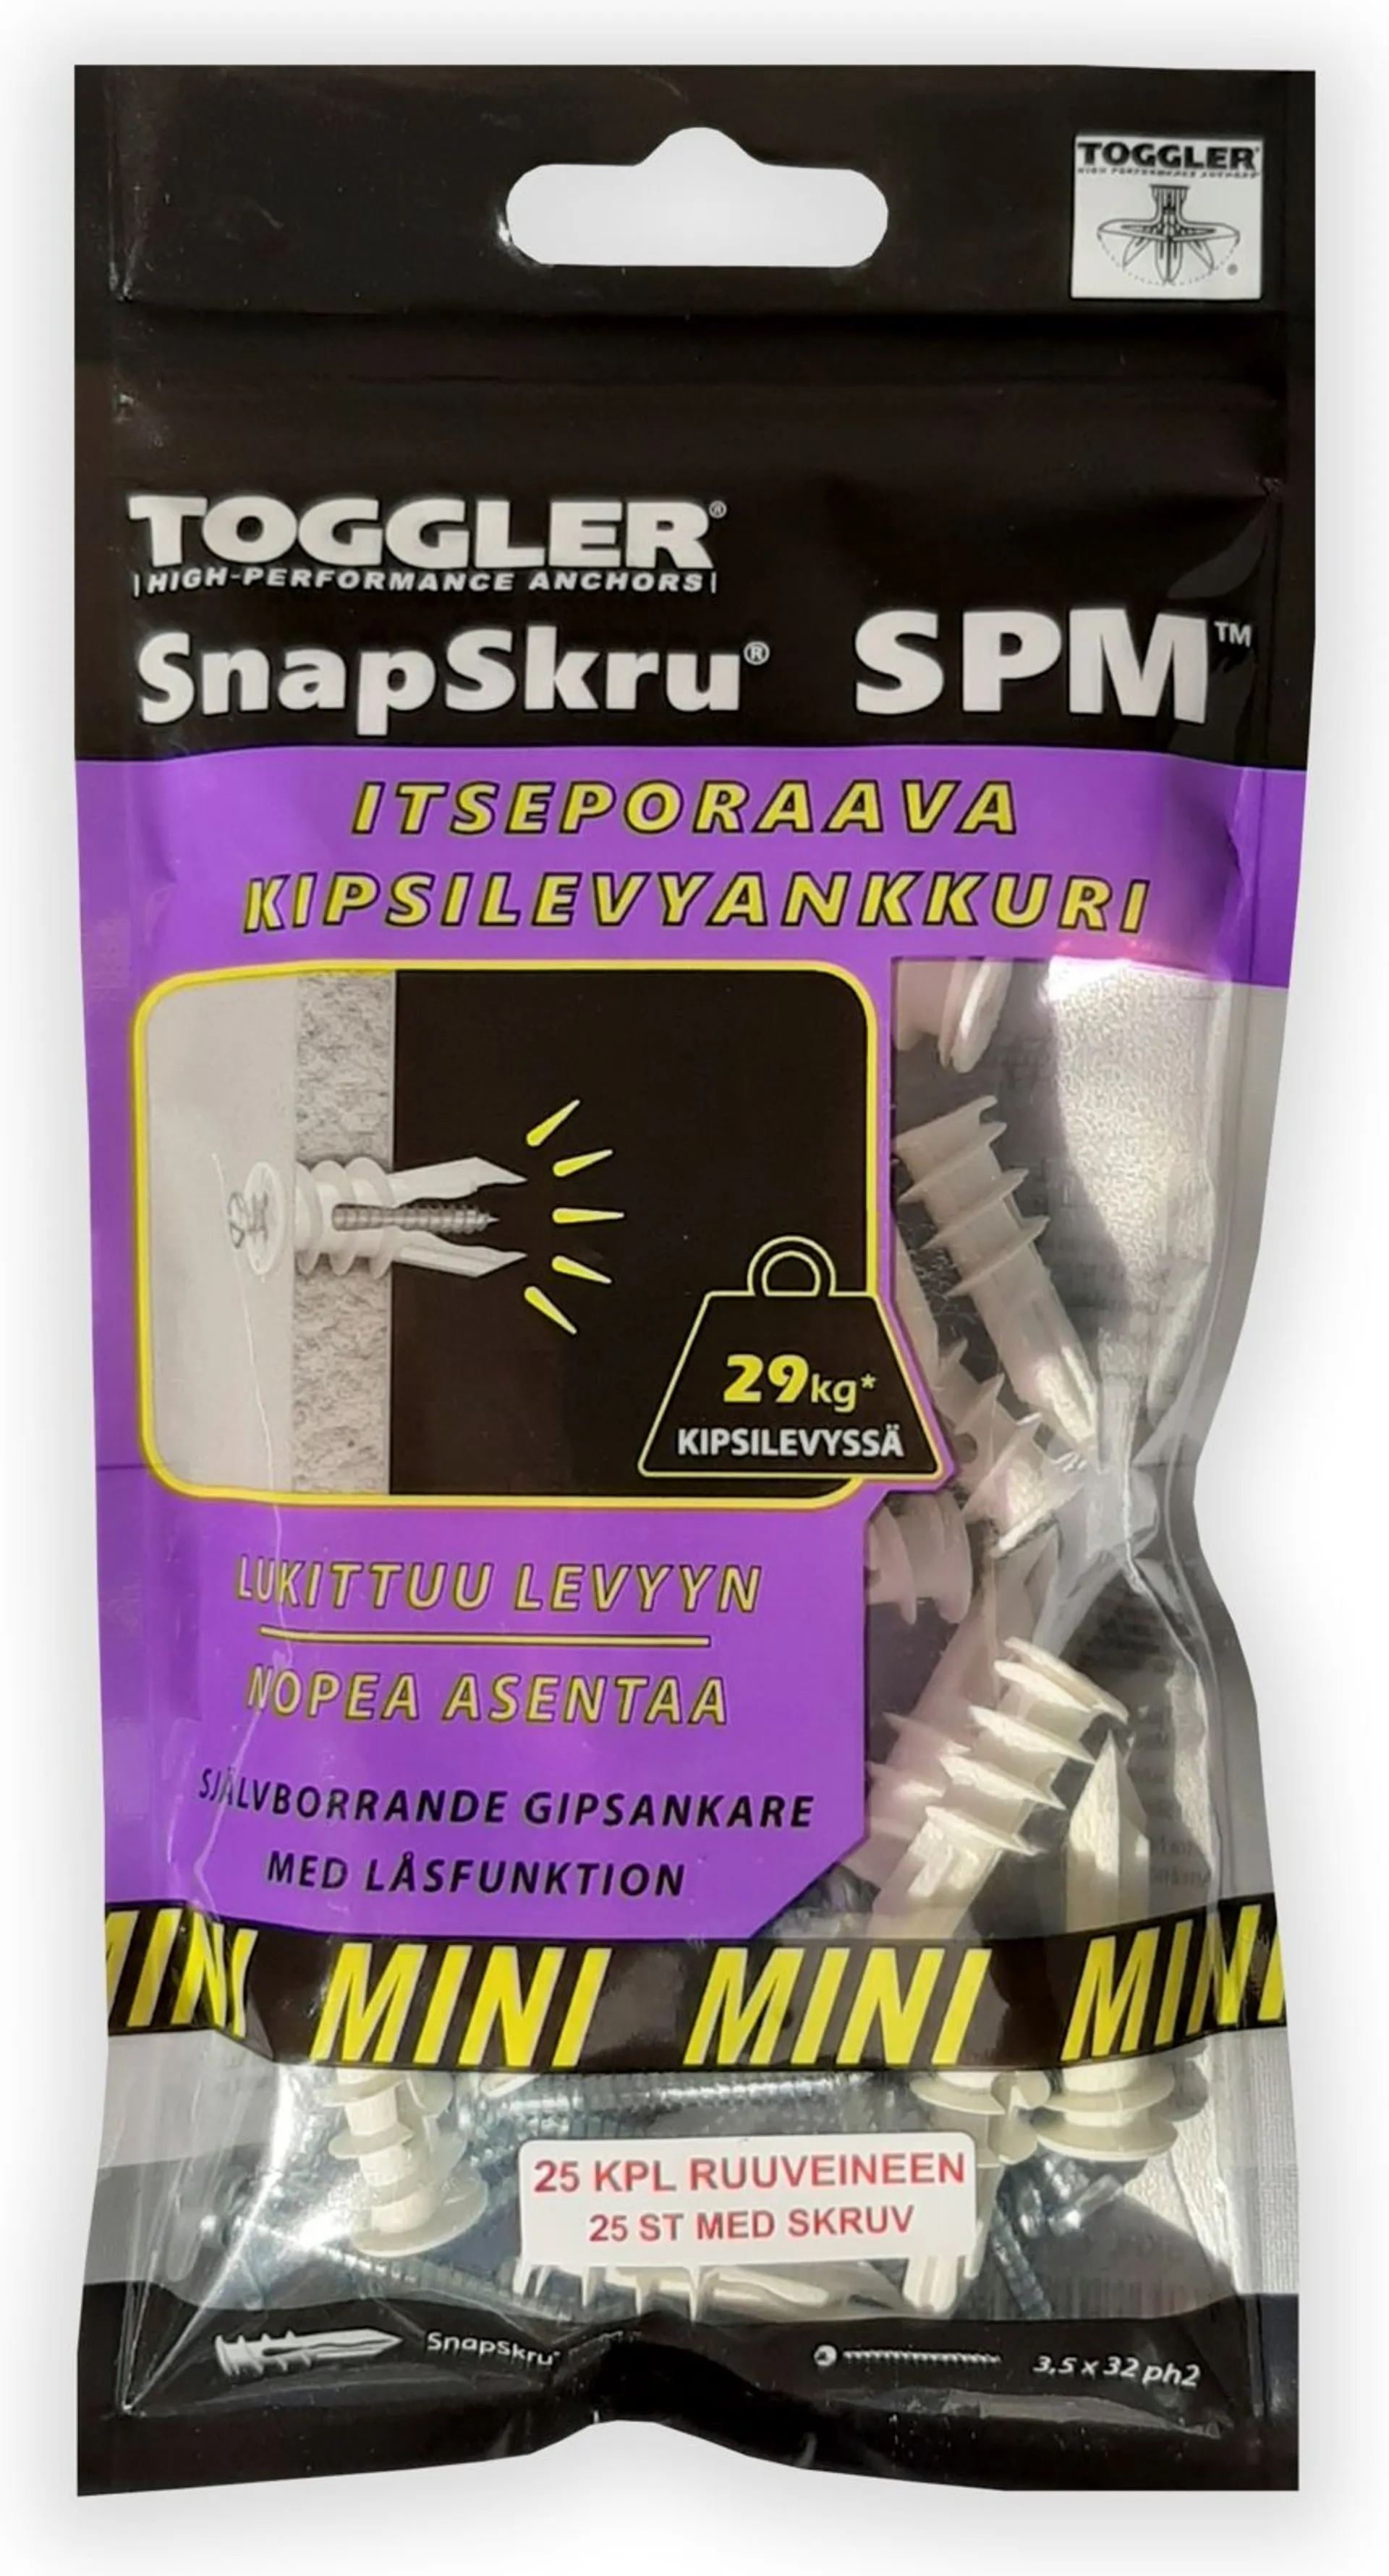 Toggler SnapSkru SP5-25 kipsilevyankkuri SPM MINI 25kpl + ruuvit - 1